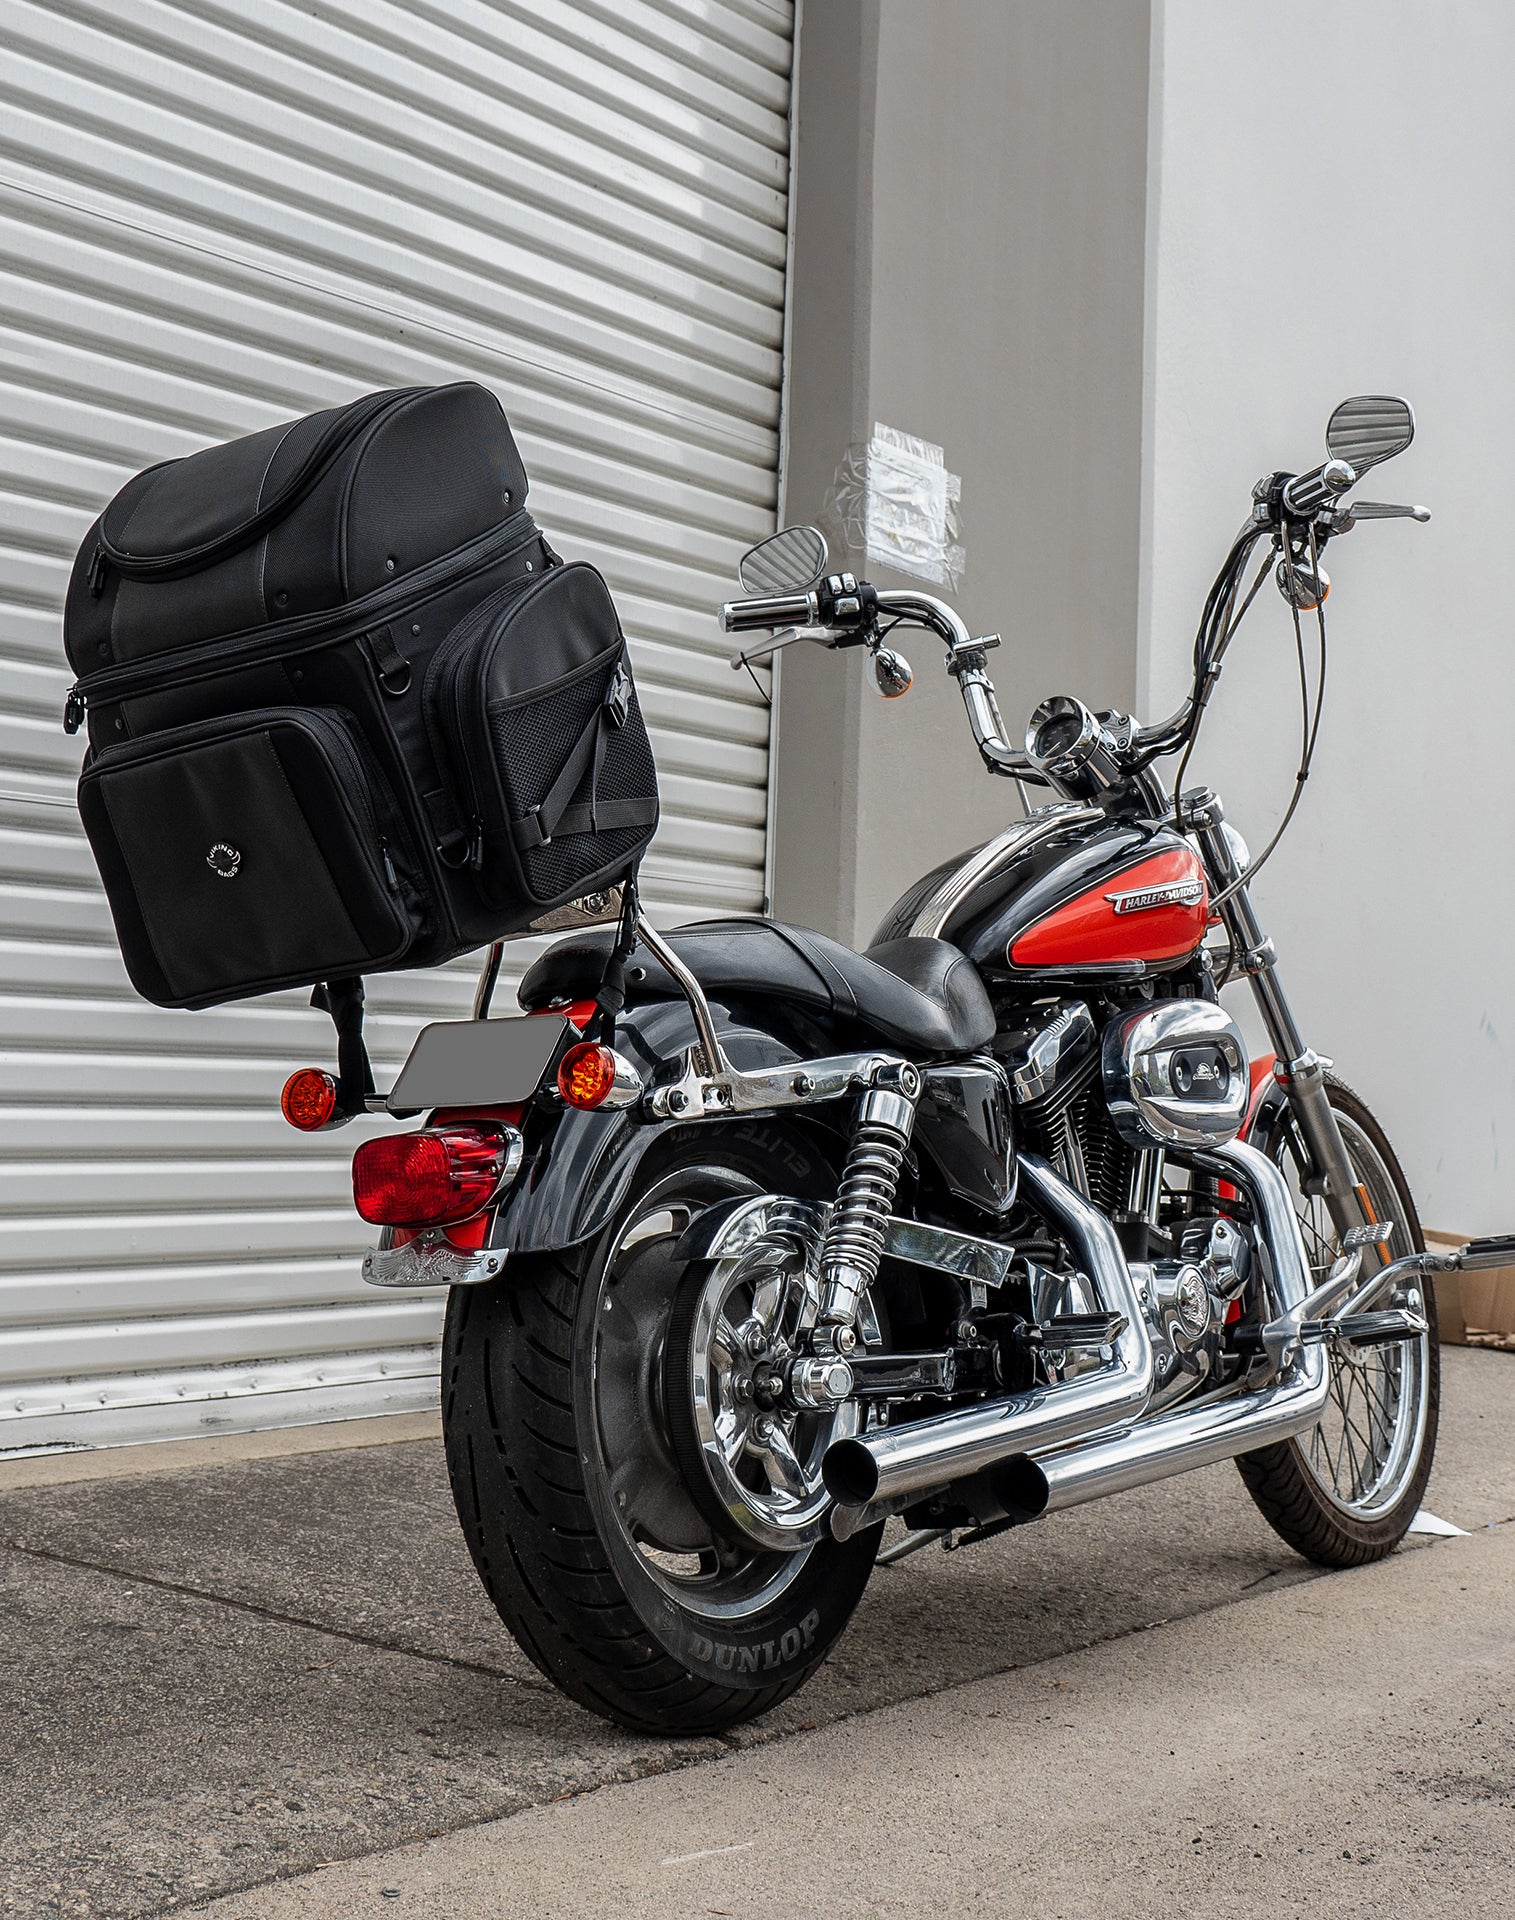 52L - Galleon XL Suzuki Motorcycle Sissy Bar Bag